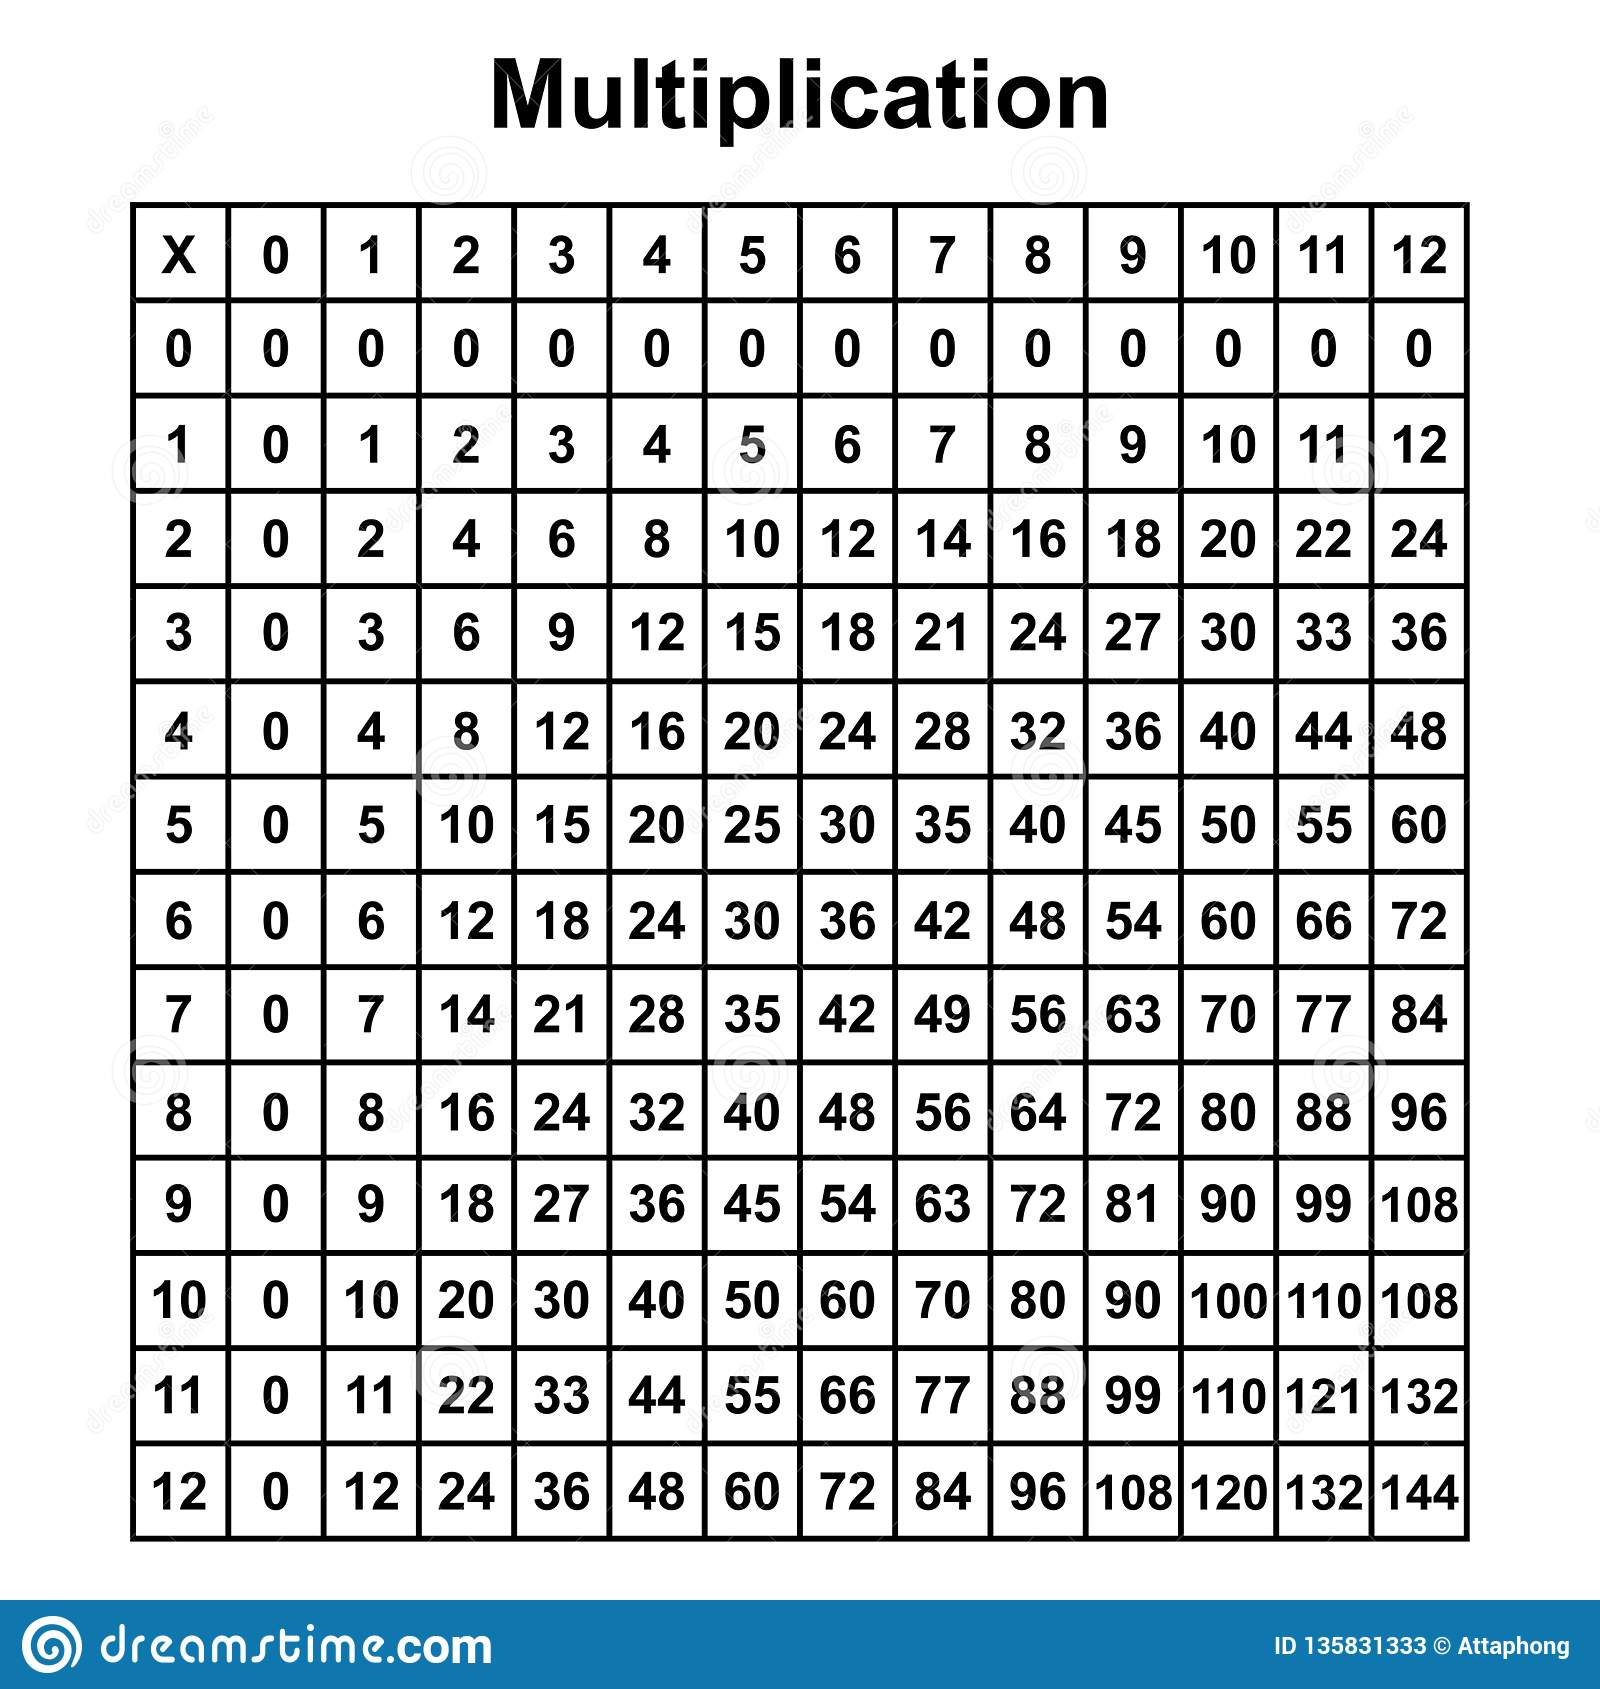 Multiplication Chart Printable | PrintableMultiplication.com